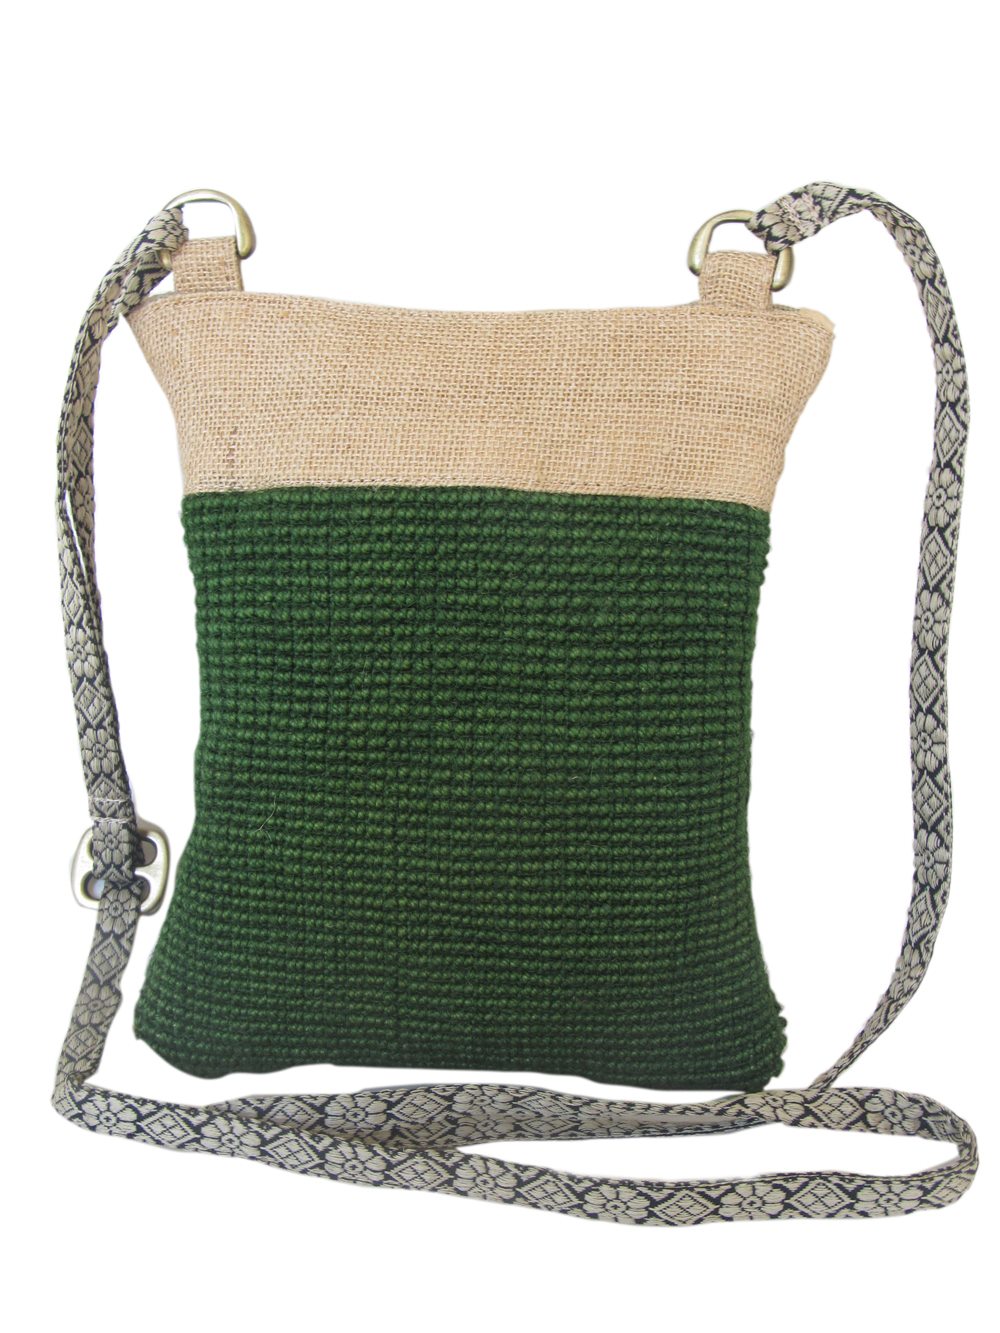 Leaf & Fiber Kindle Eco-Friedly Cross-Body Bag - Green